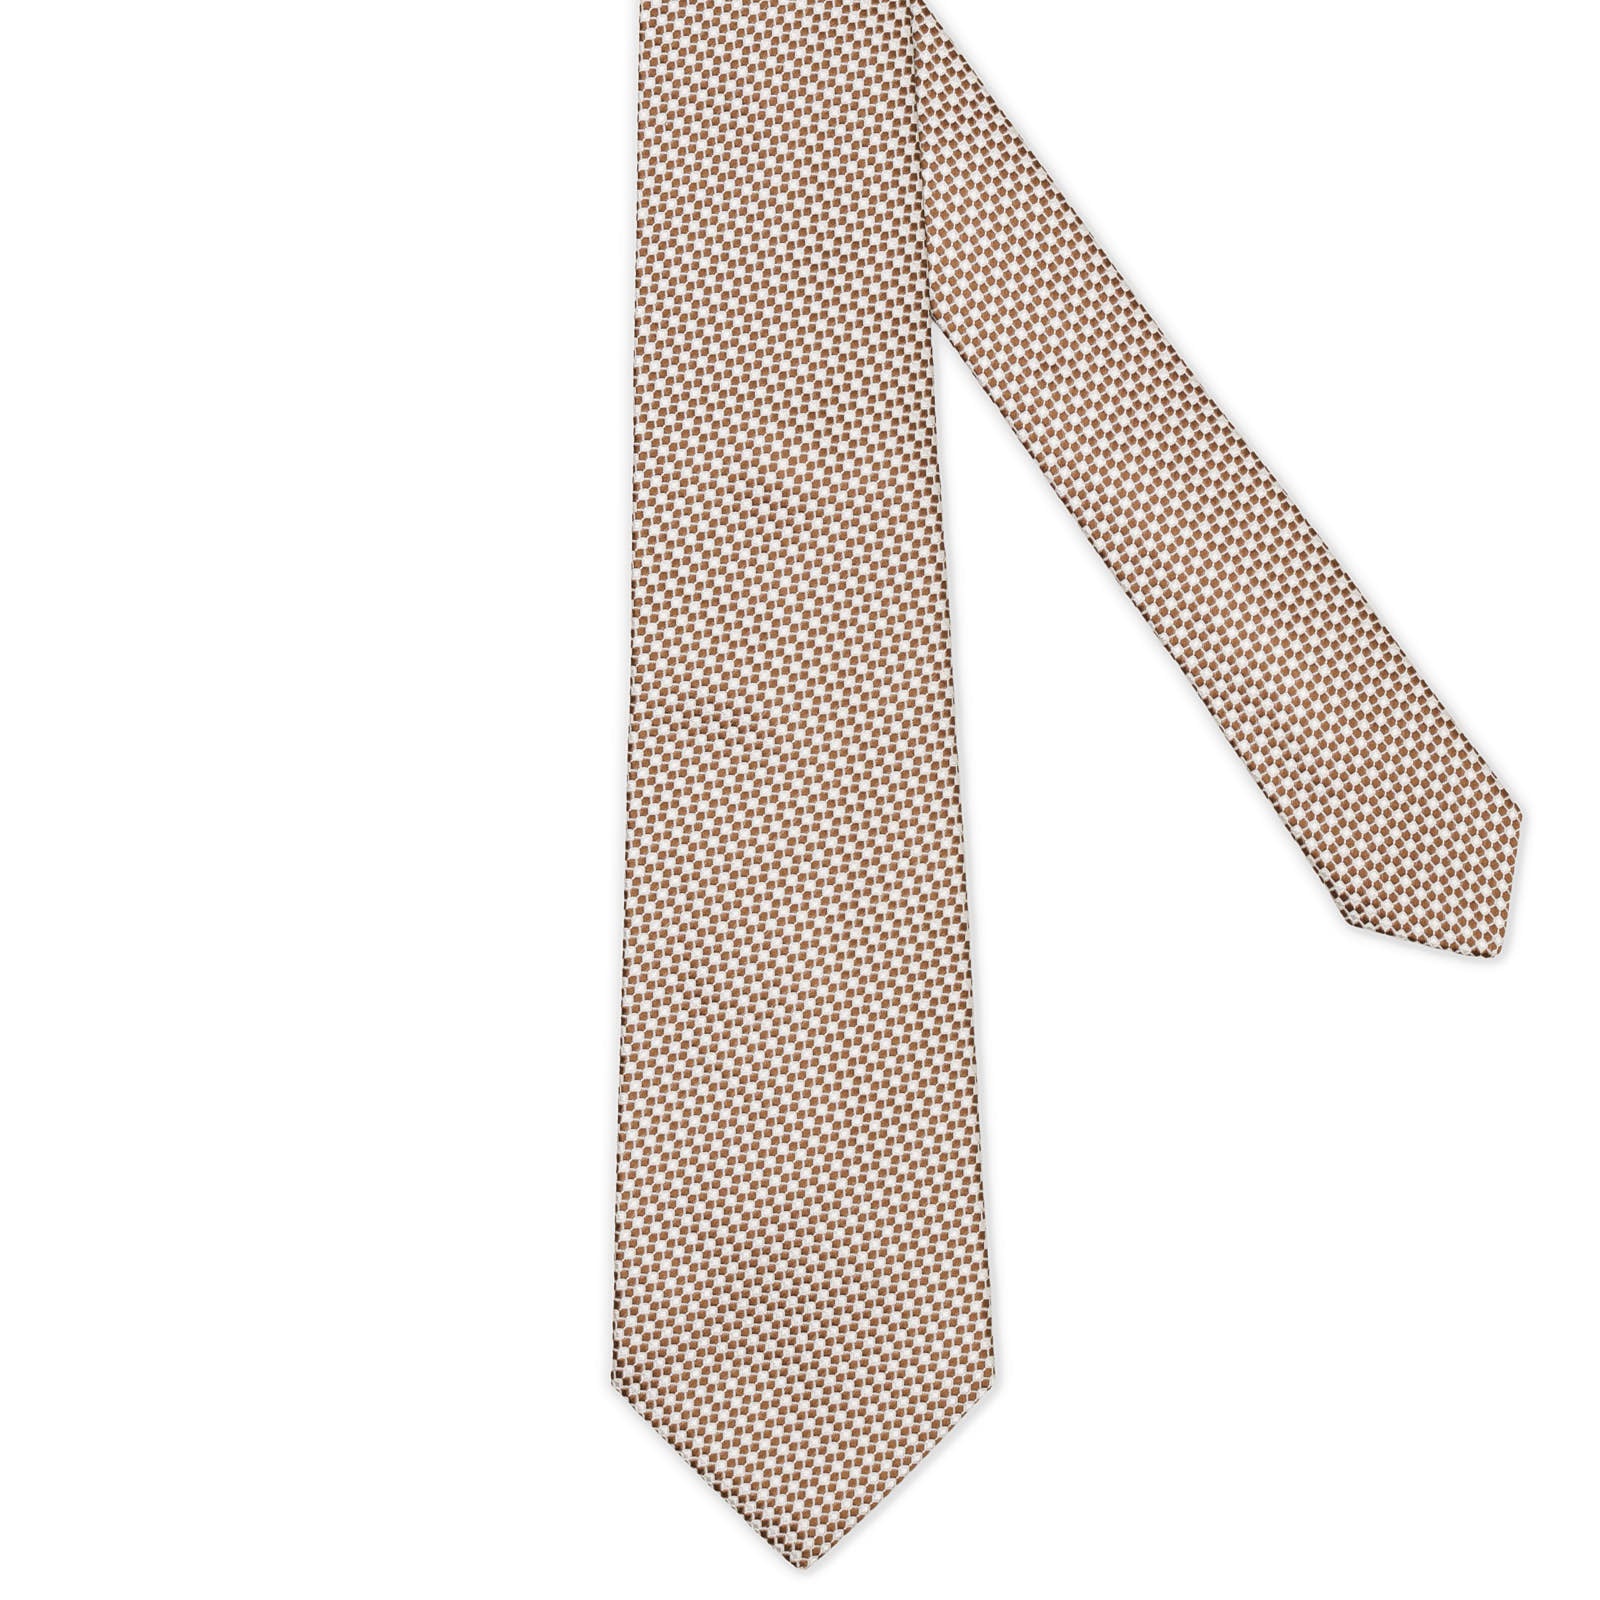 MATTABISCH of for VANNUCCI Brown and White Geometric Seven Fold Silk Tie NEW